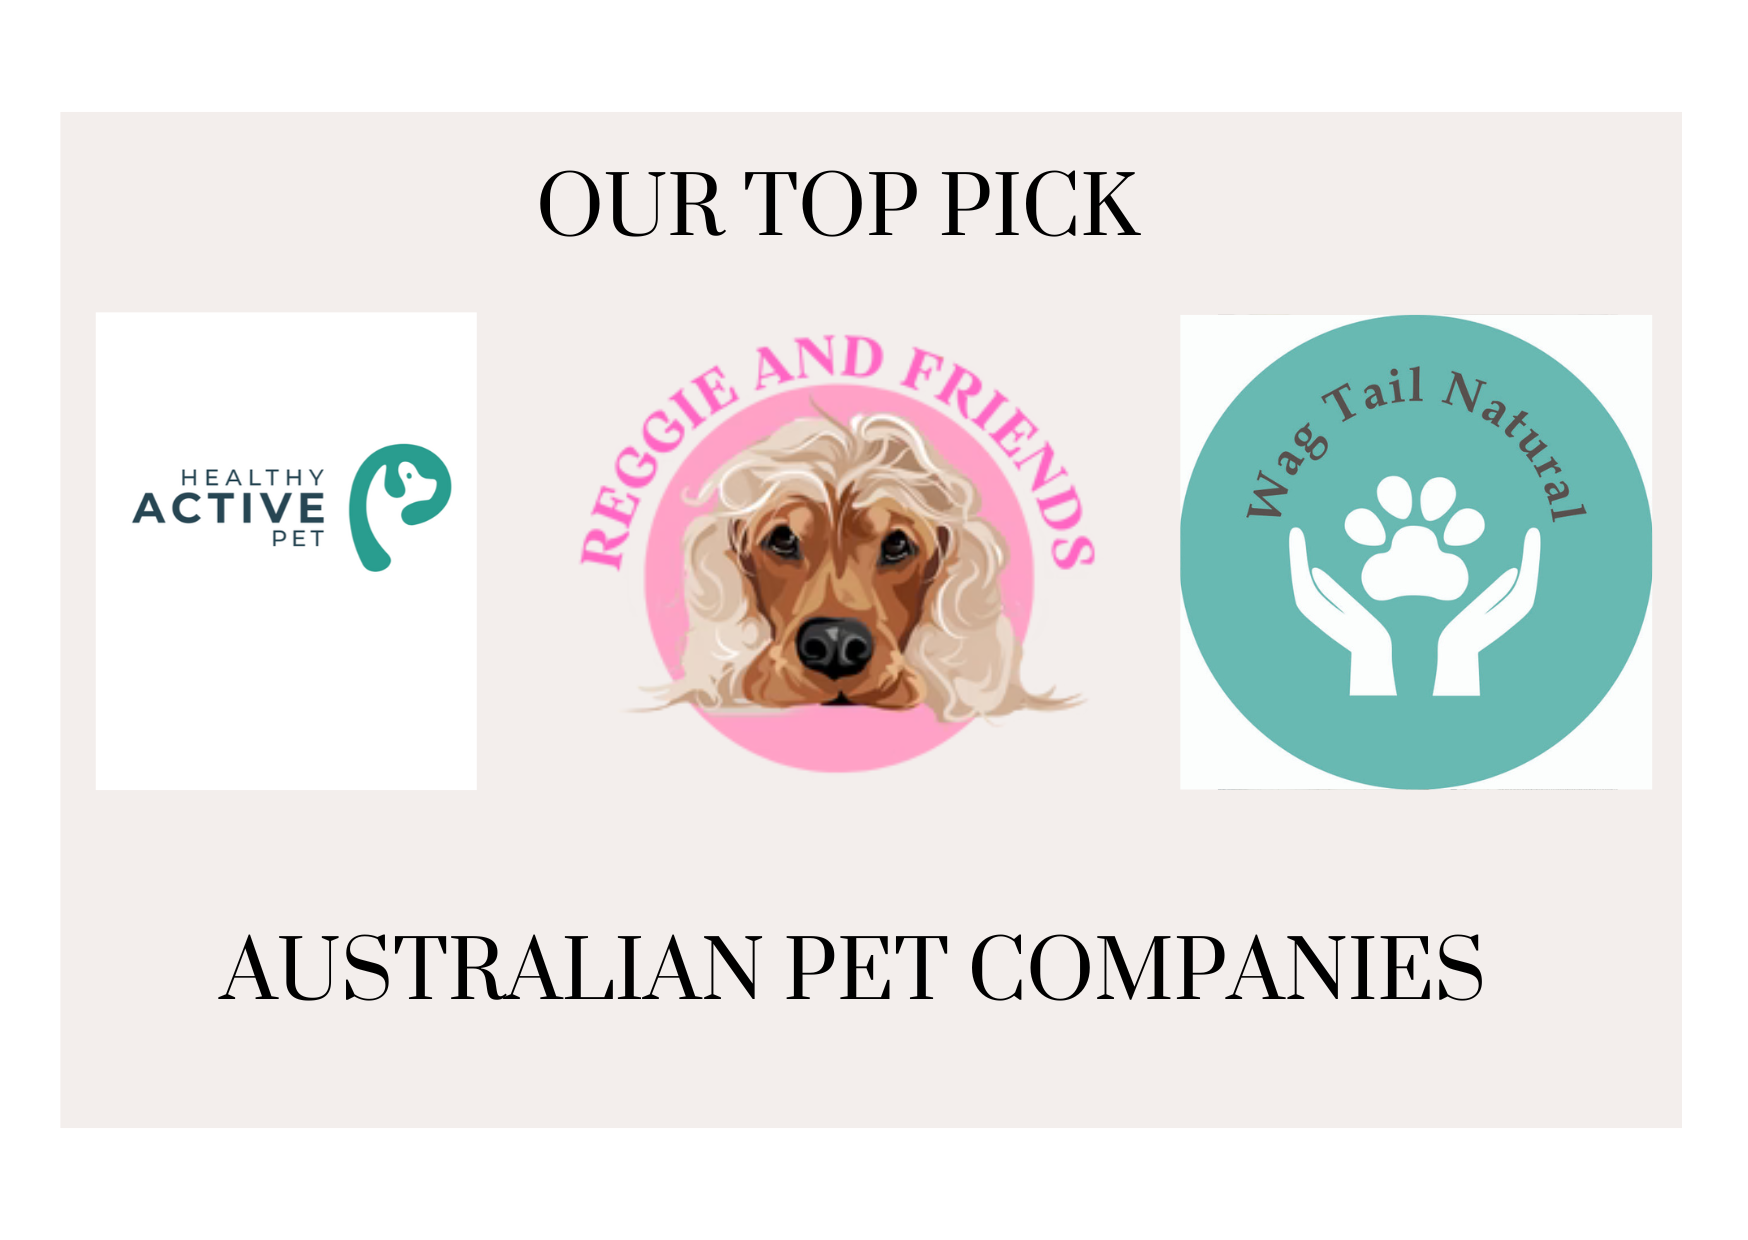 "🐾 Meet our top pick Australian pet companies!